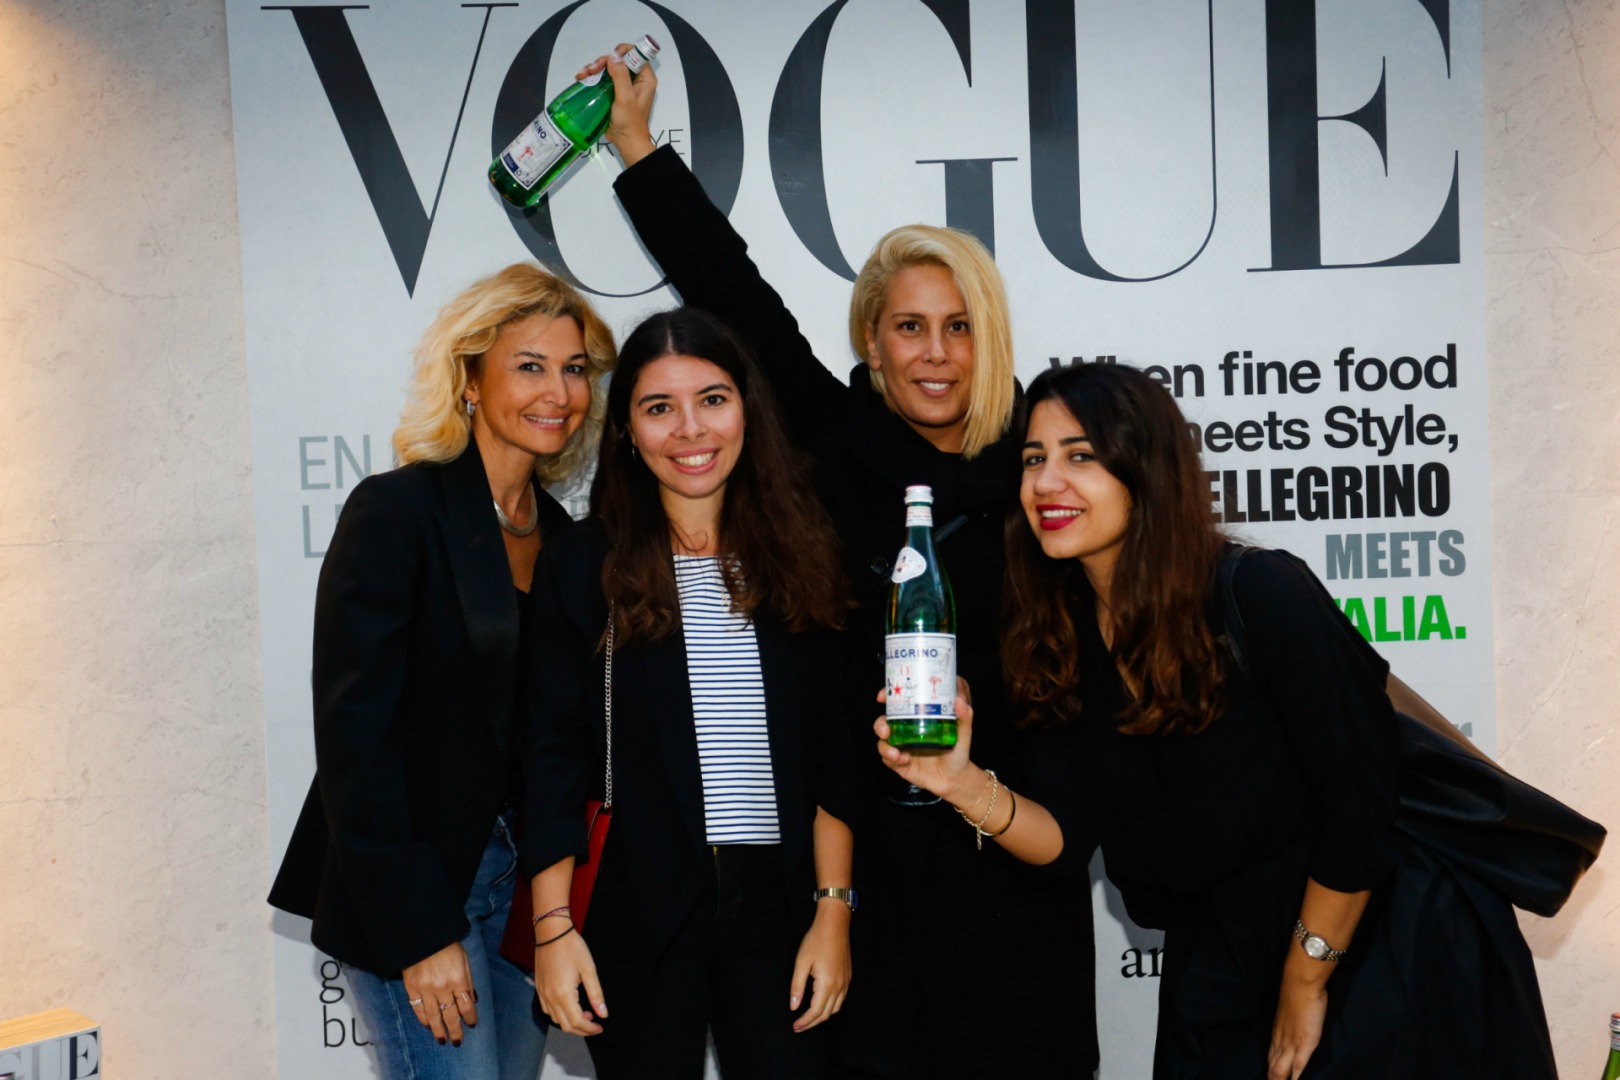 Vogue x S.Pellegrino